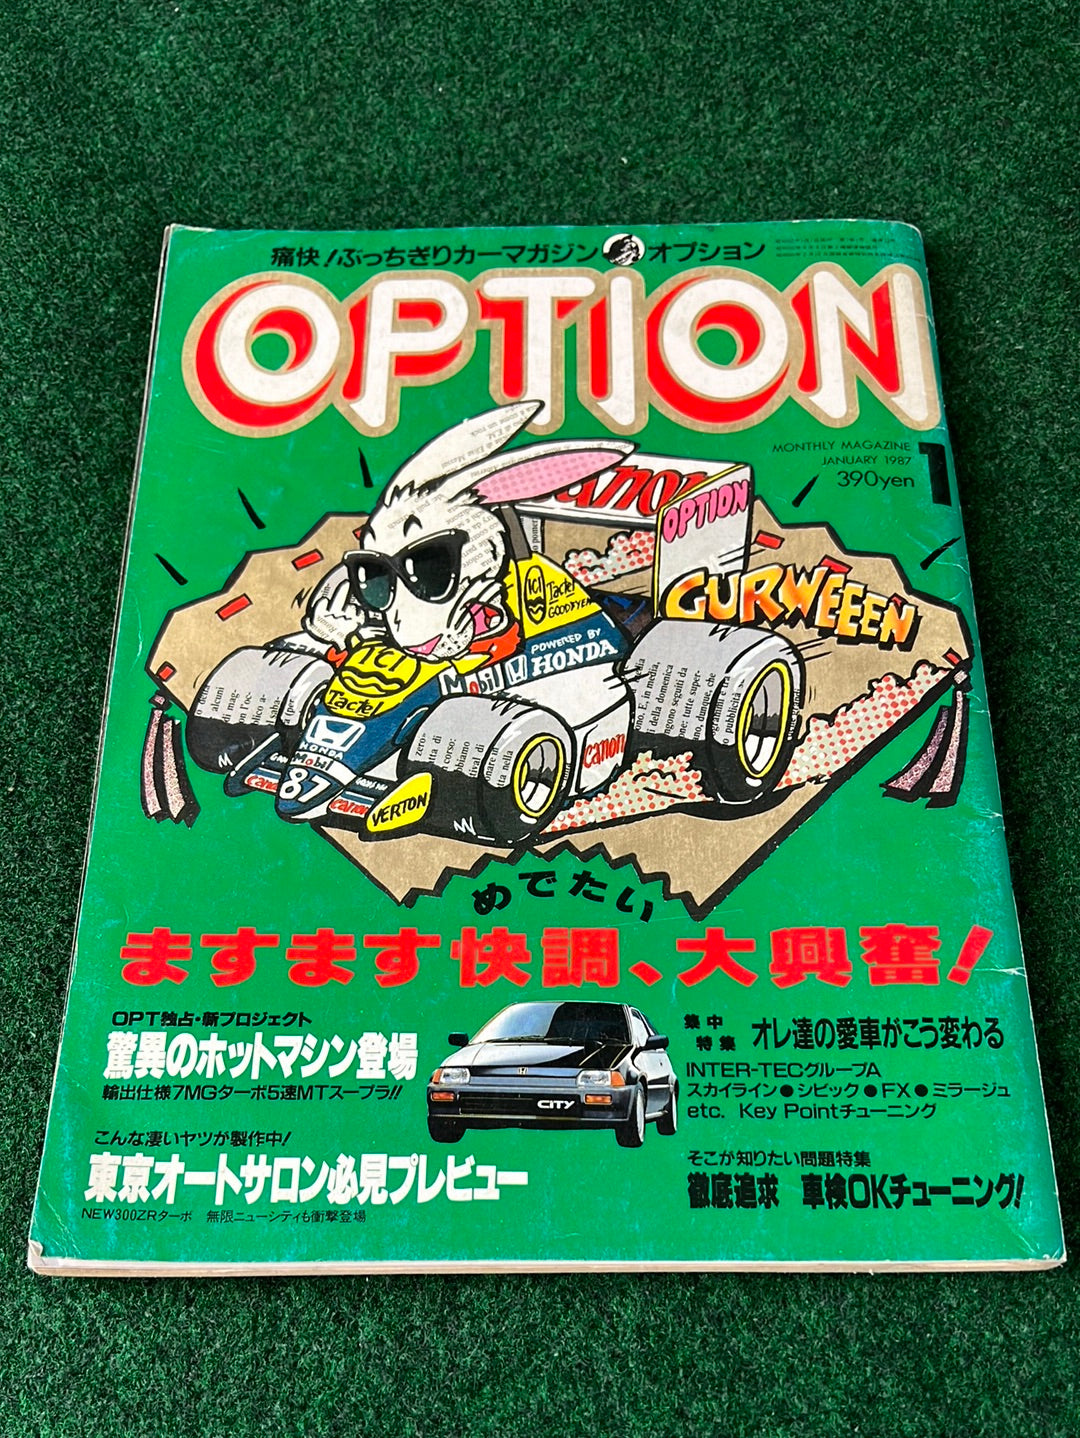 OPTION Magazine - 1987 Complete Set